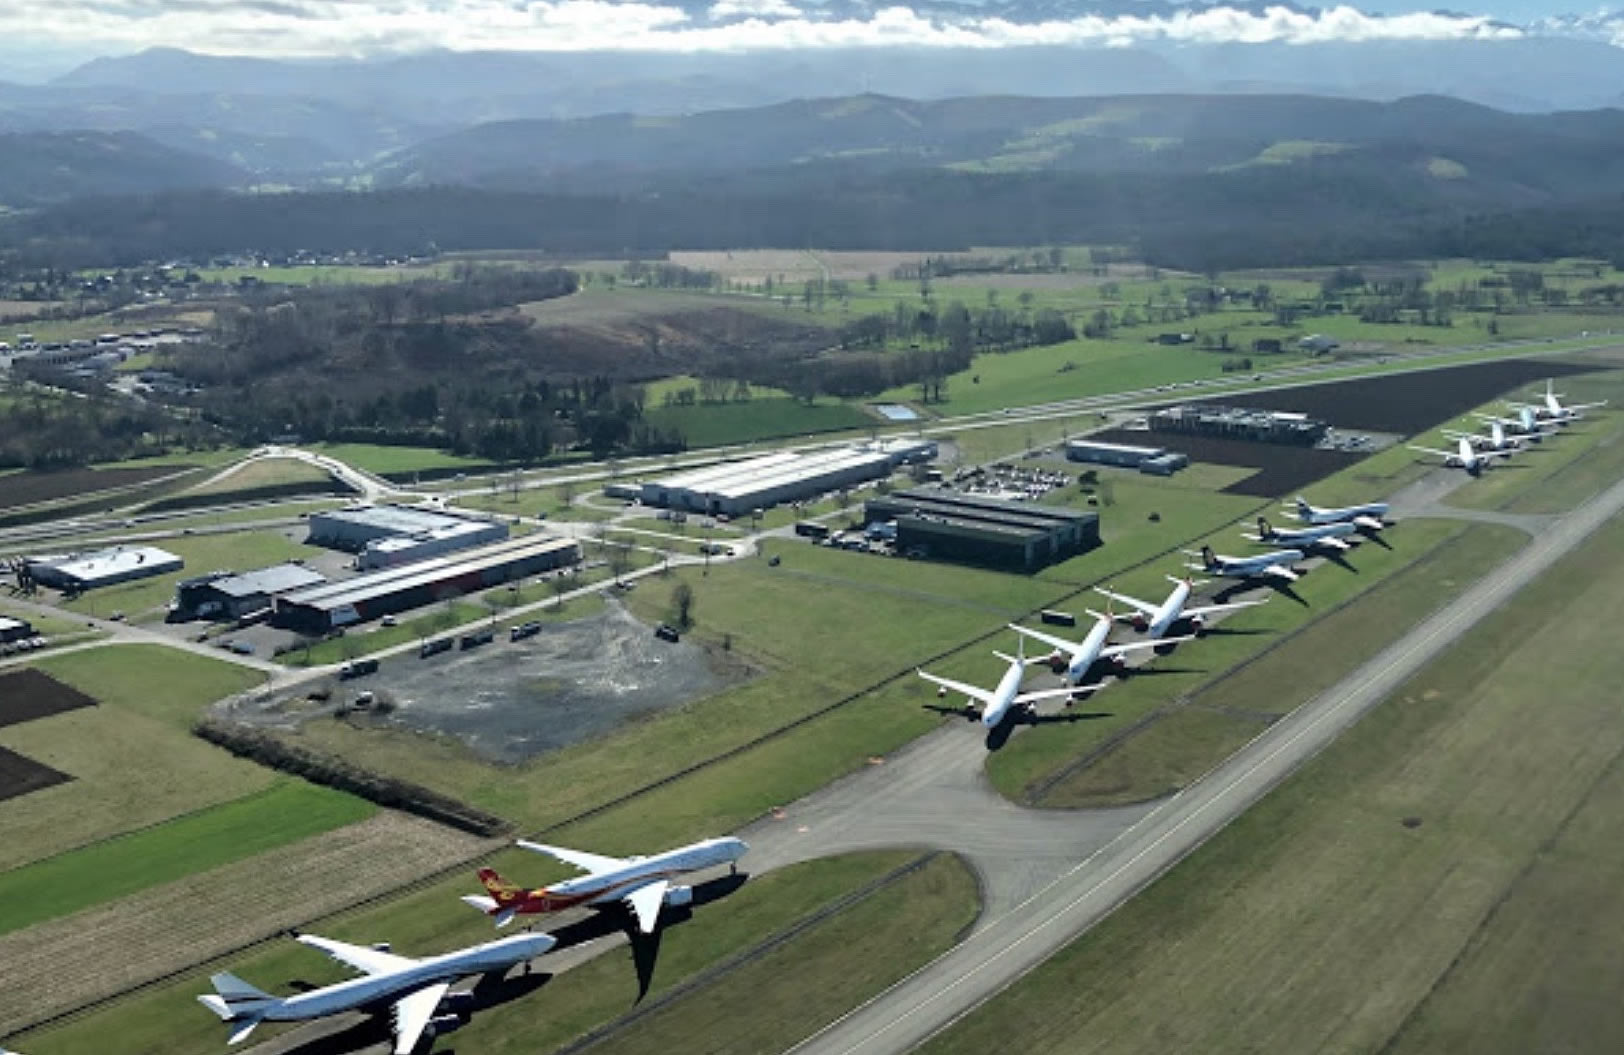 TARMAC Aerosave operations at the Tarbes–Lourdes–Pyrénées Airport